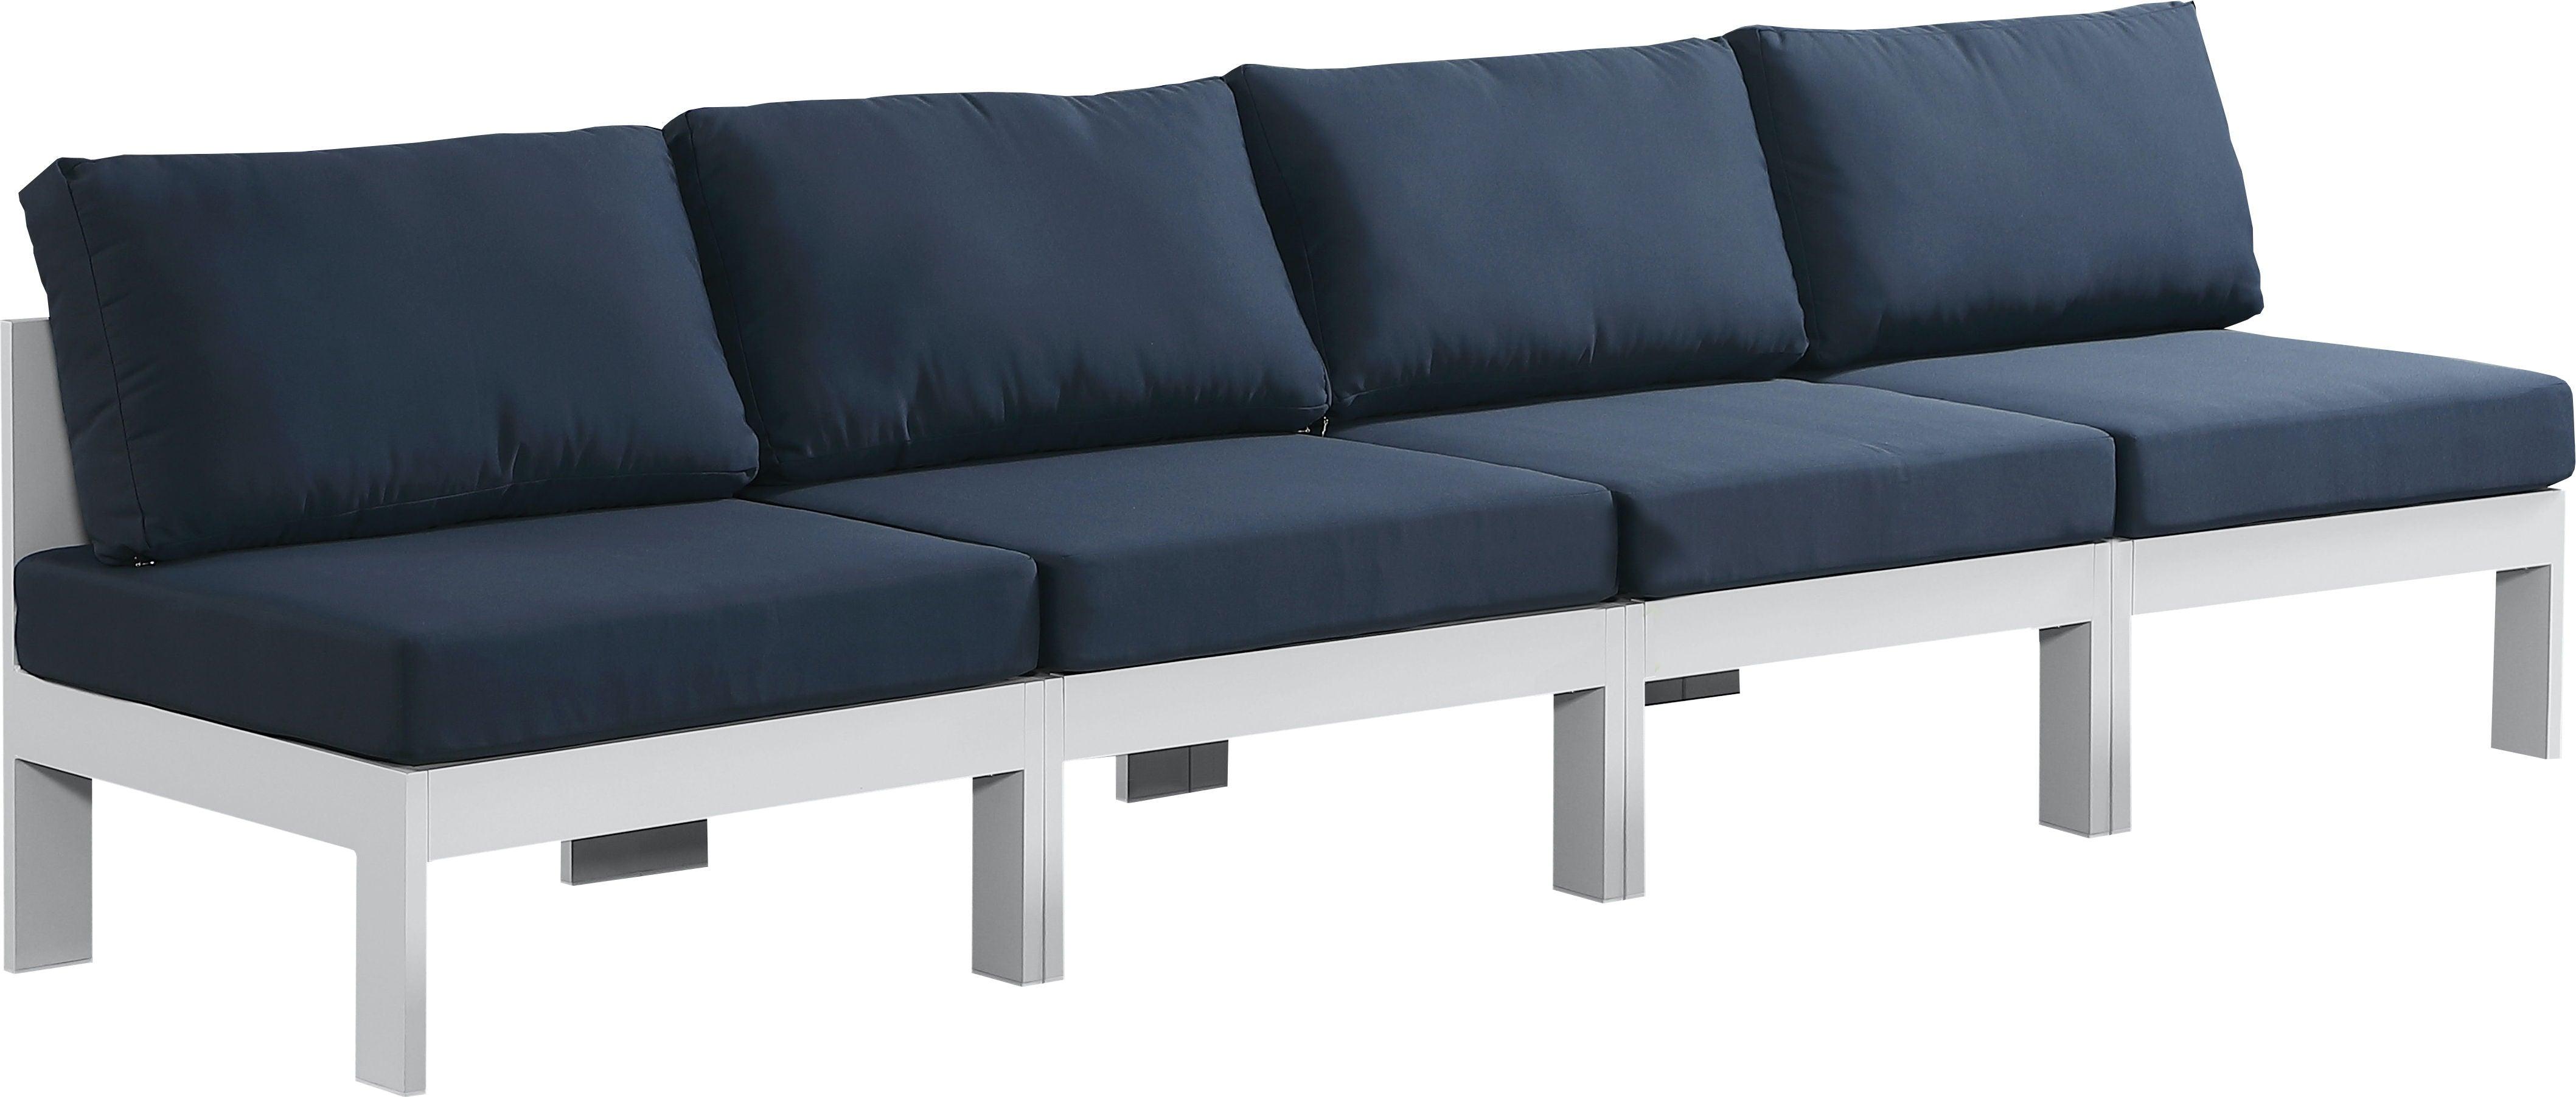 Meridian Furniture - Nizuc - Outdoor Patio Modular Sofa 4 Seats - Navy - 5th Avenue Furniture